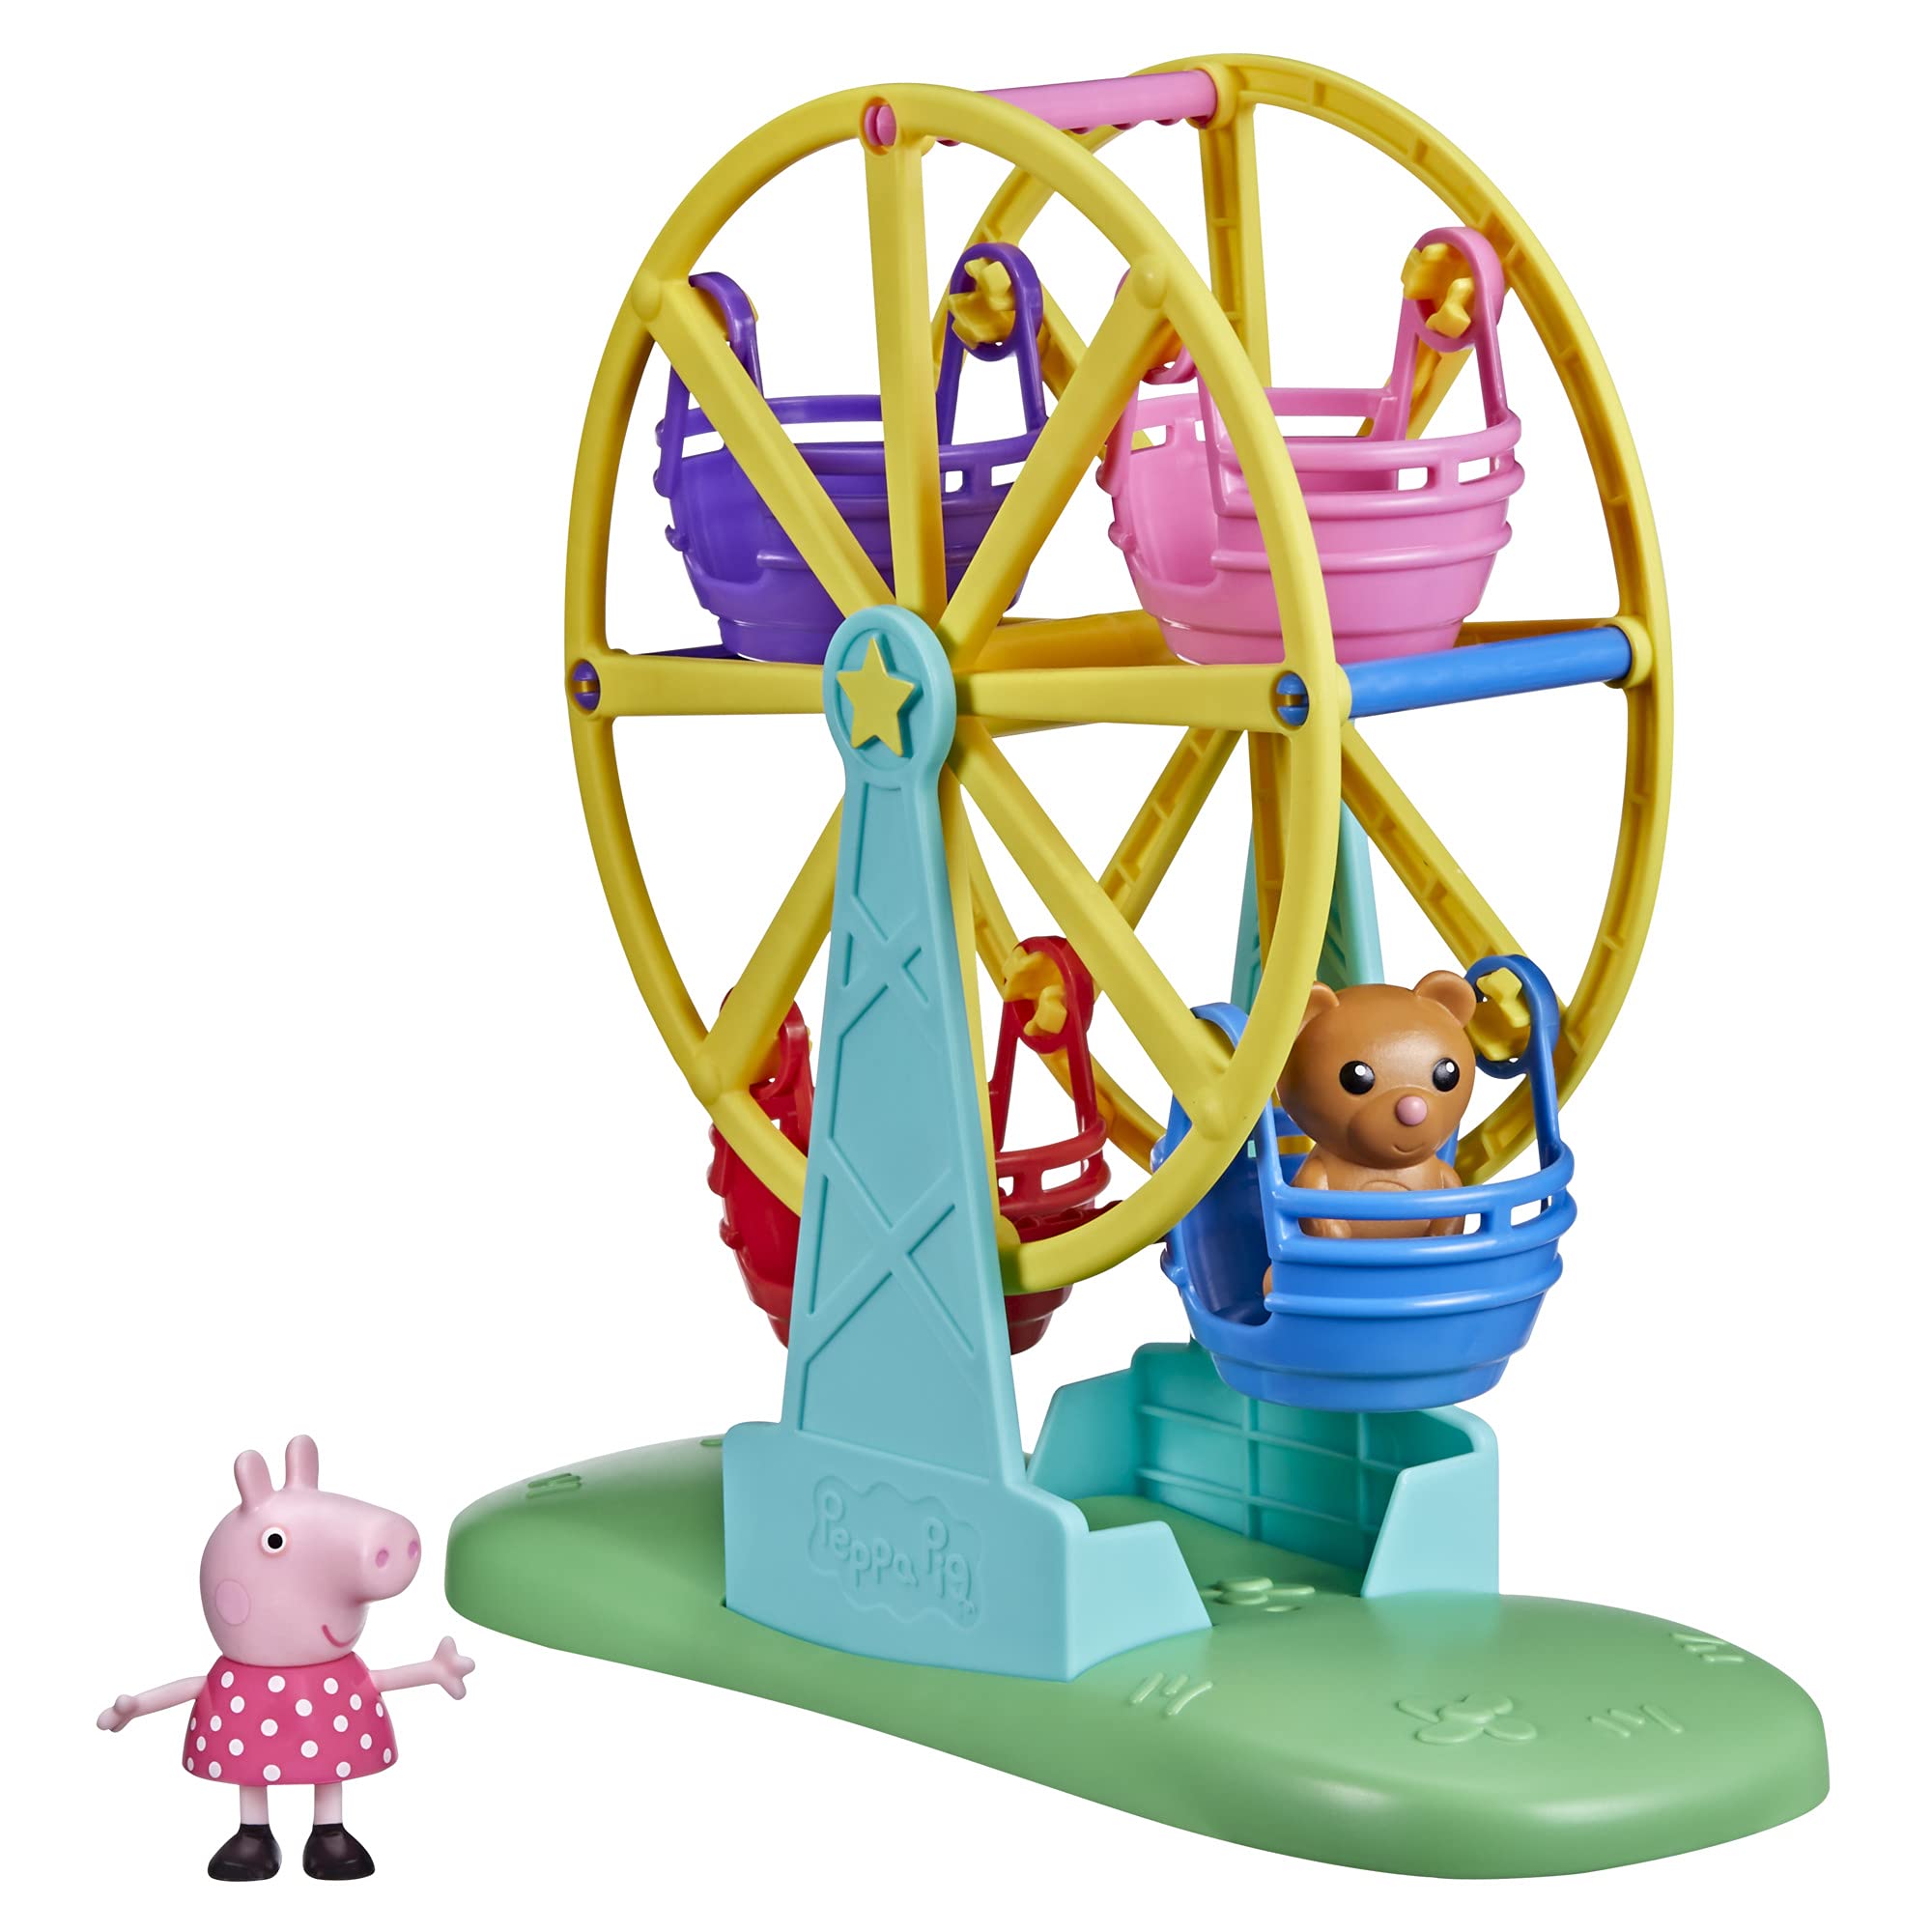 Hasbro Peppa Pig Adventures Kids' Interactive Ferris Wheel Playset w/ Peppa Figure $10 + Free Shipping w/ Prime or on $35+